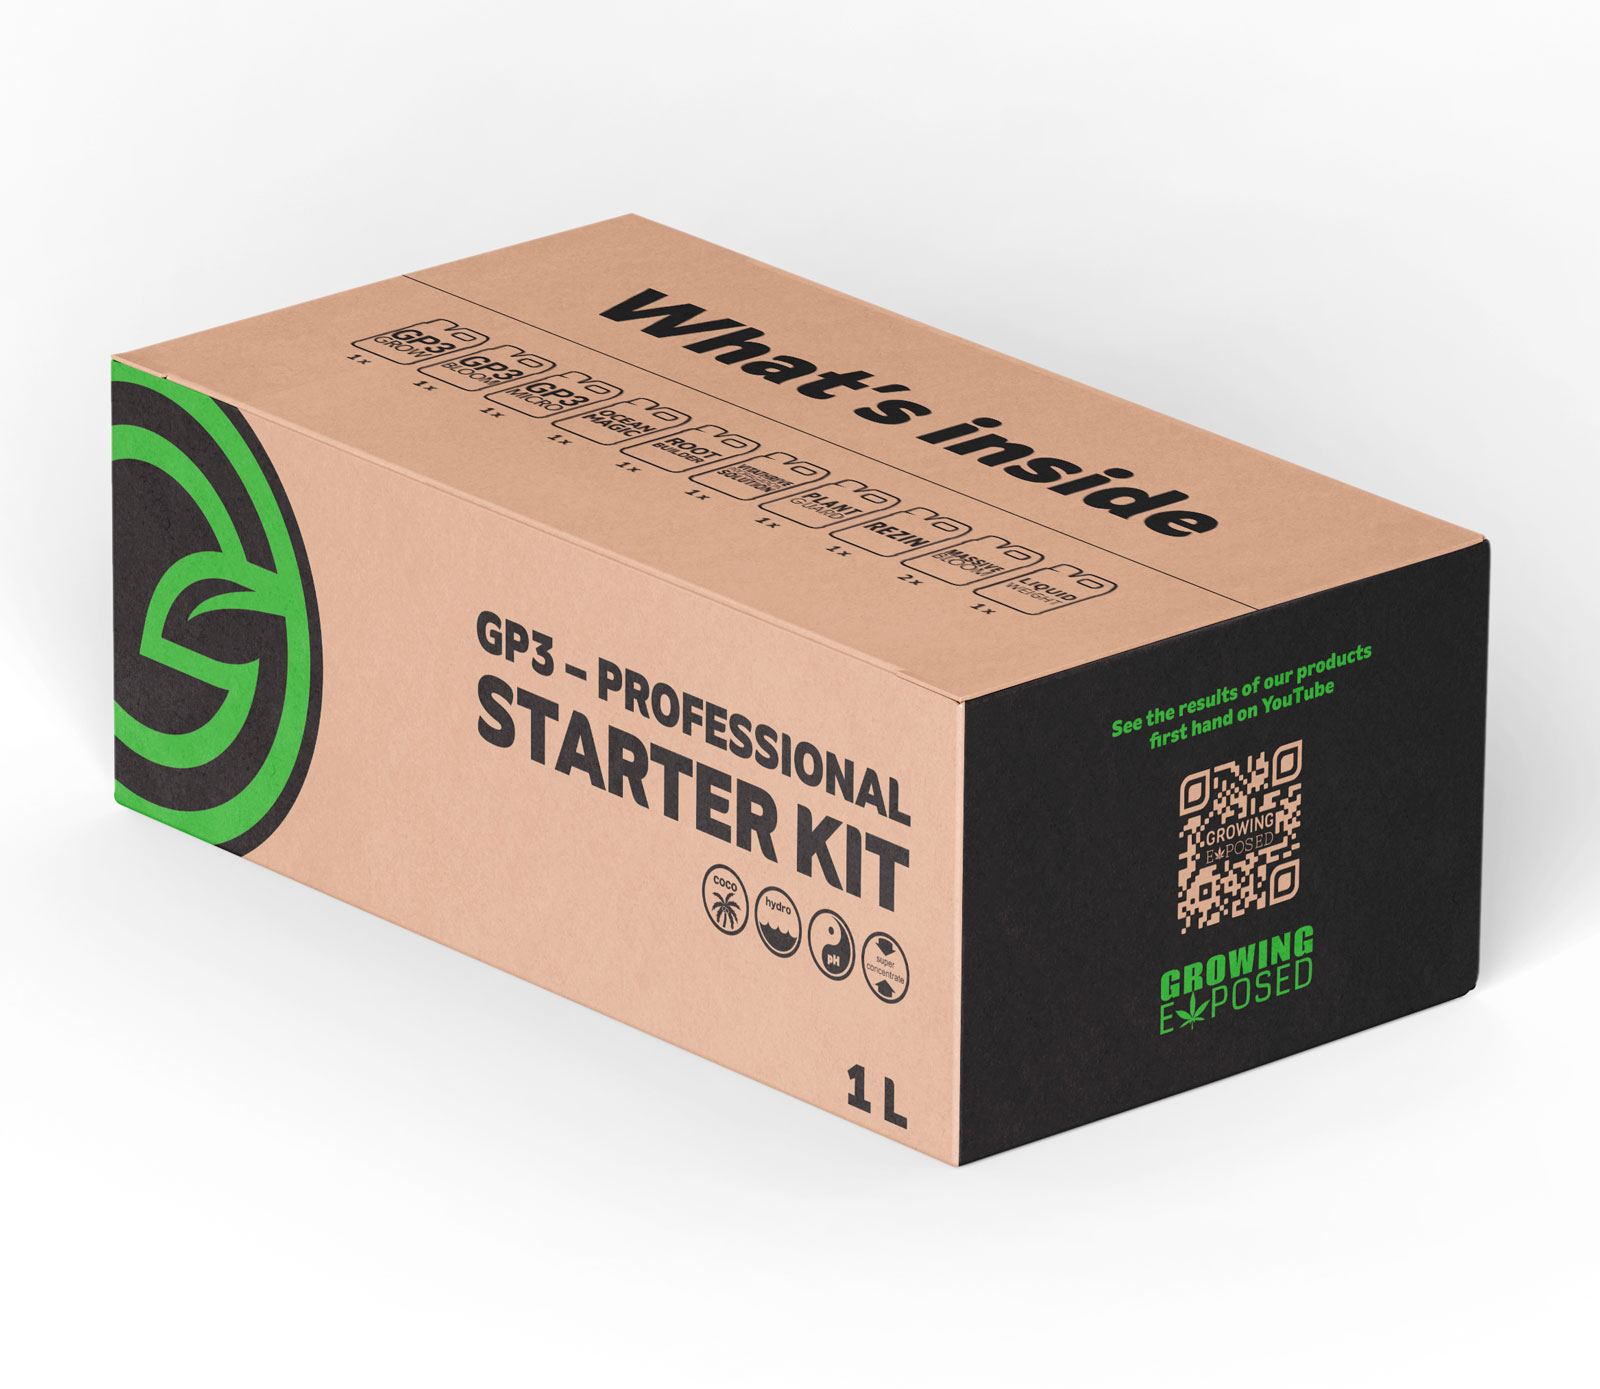 GreenPlanet GP3 Starter Kit